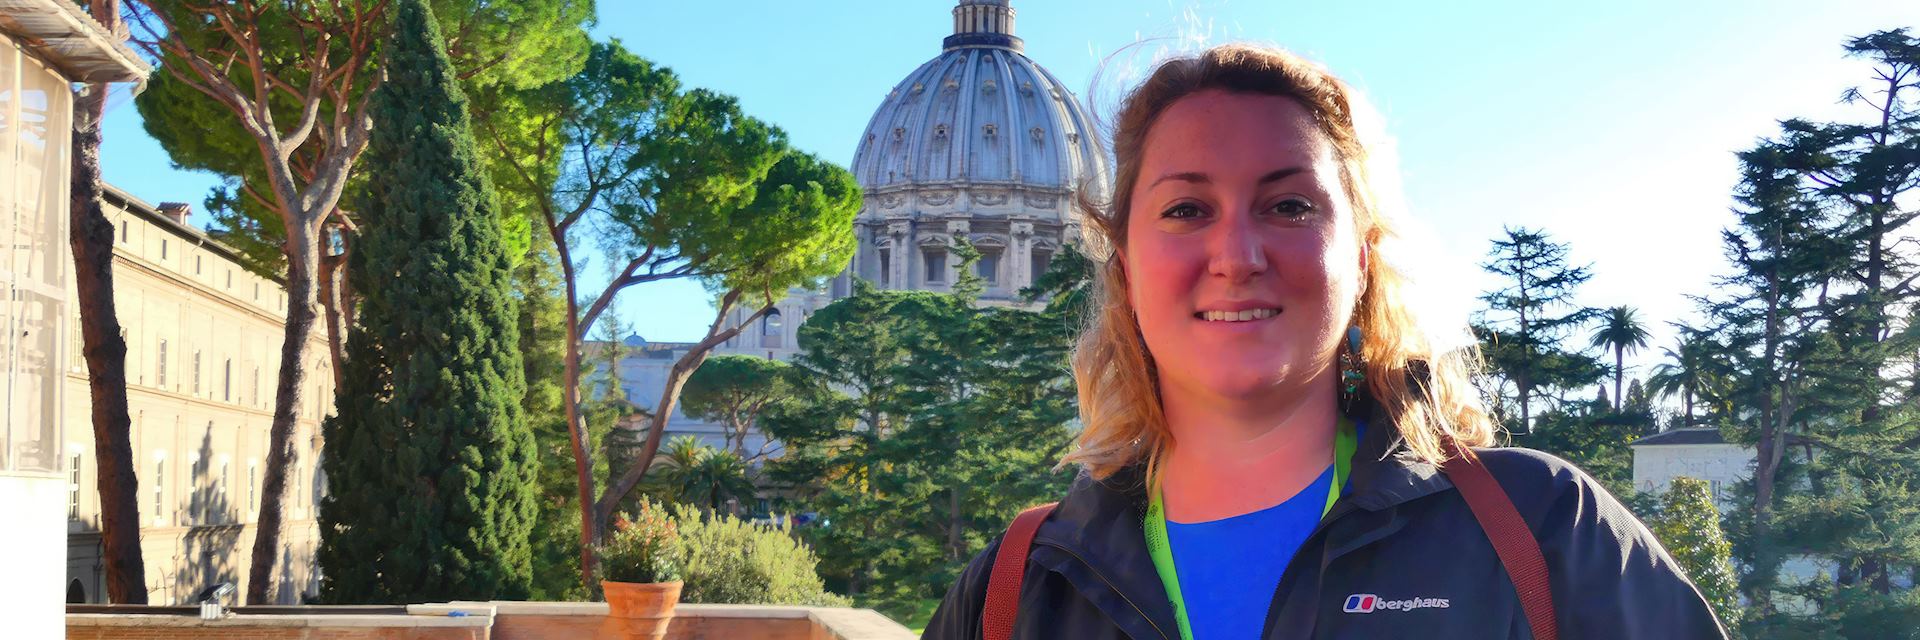 Cara visiting Vatican City in Rome, Italy